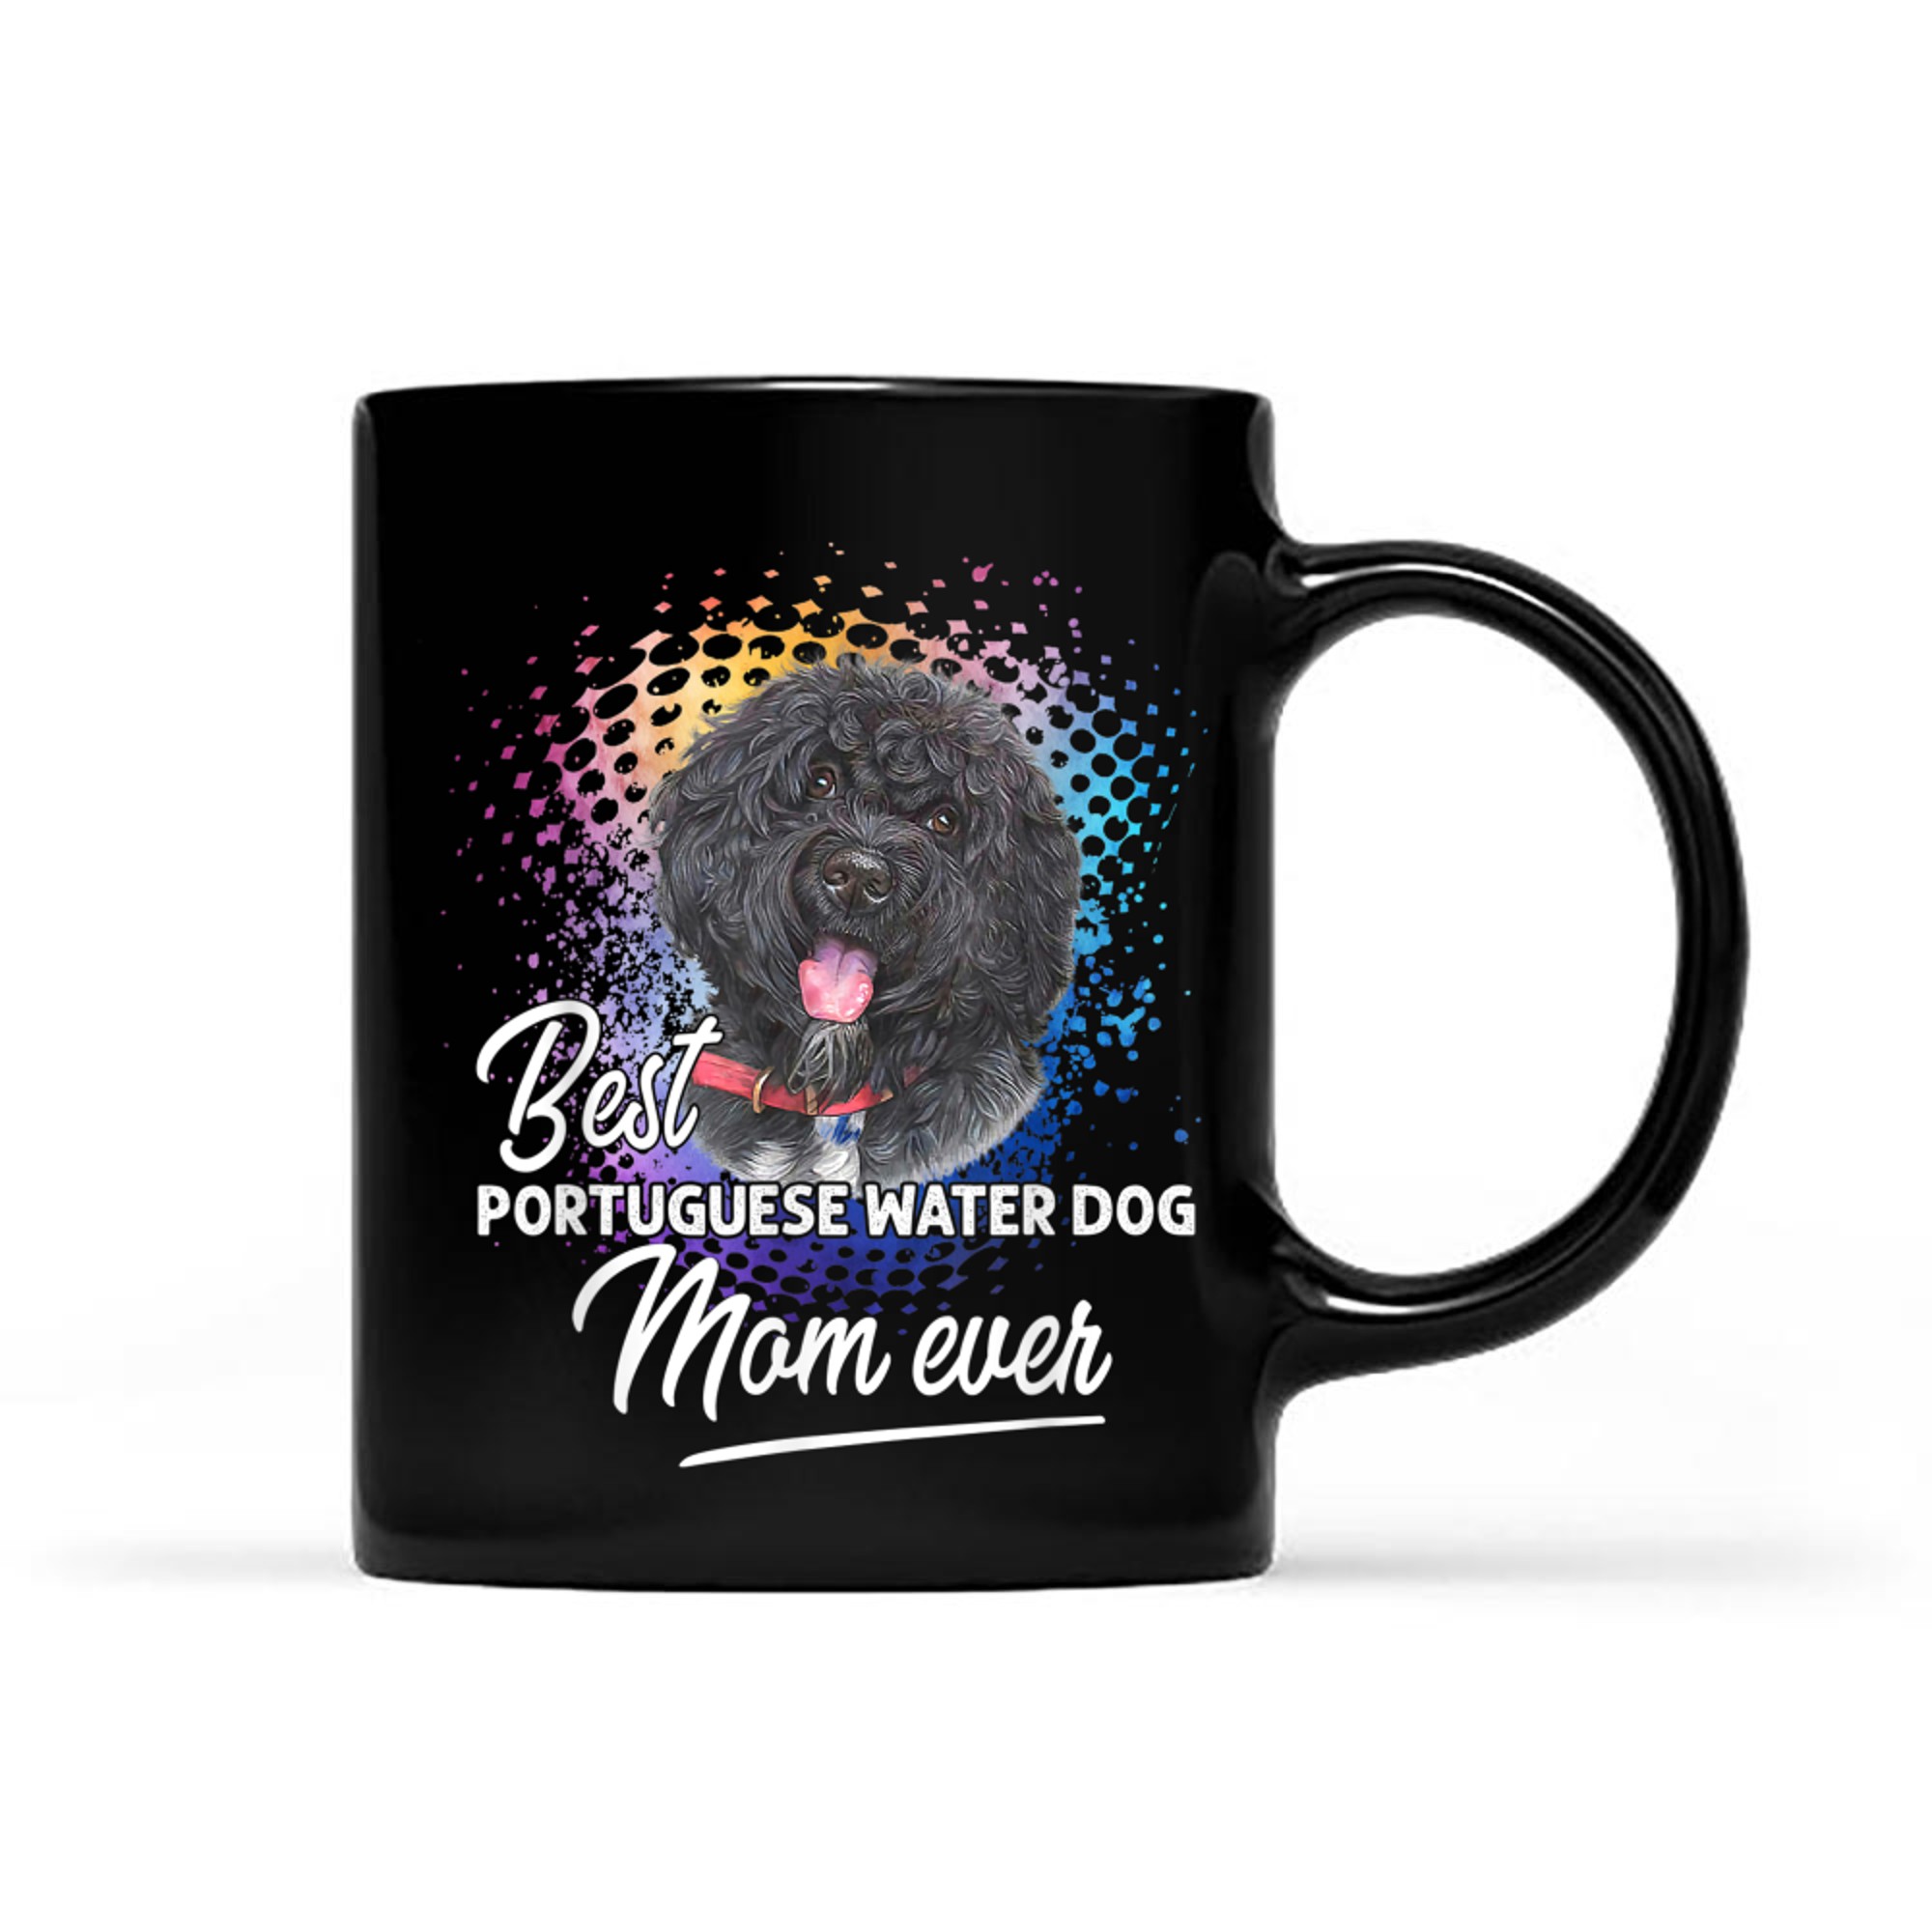 Best Portuguese Water Dog Mom Ever Mother's Day Gift mug black